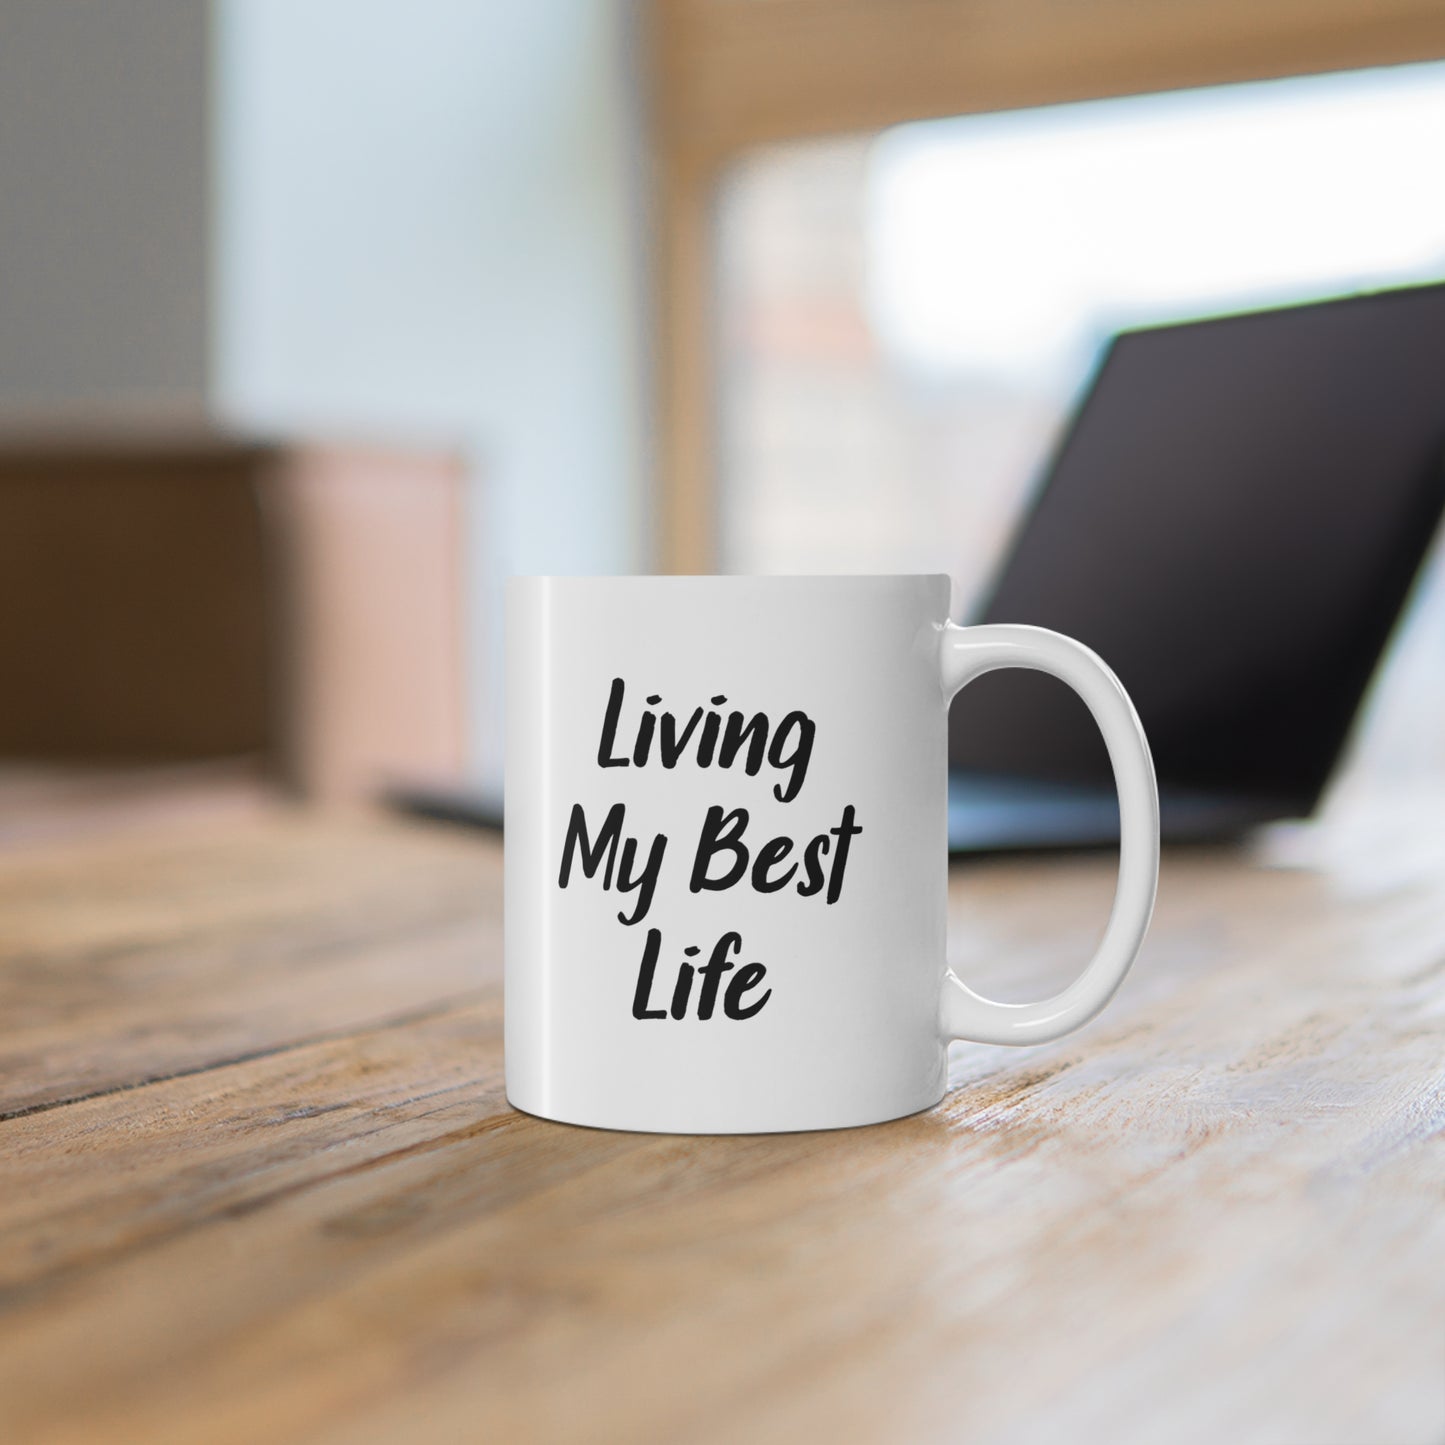 11oz ceramic mug with quote Living My Best Life